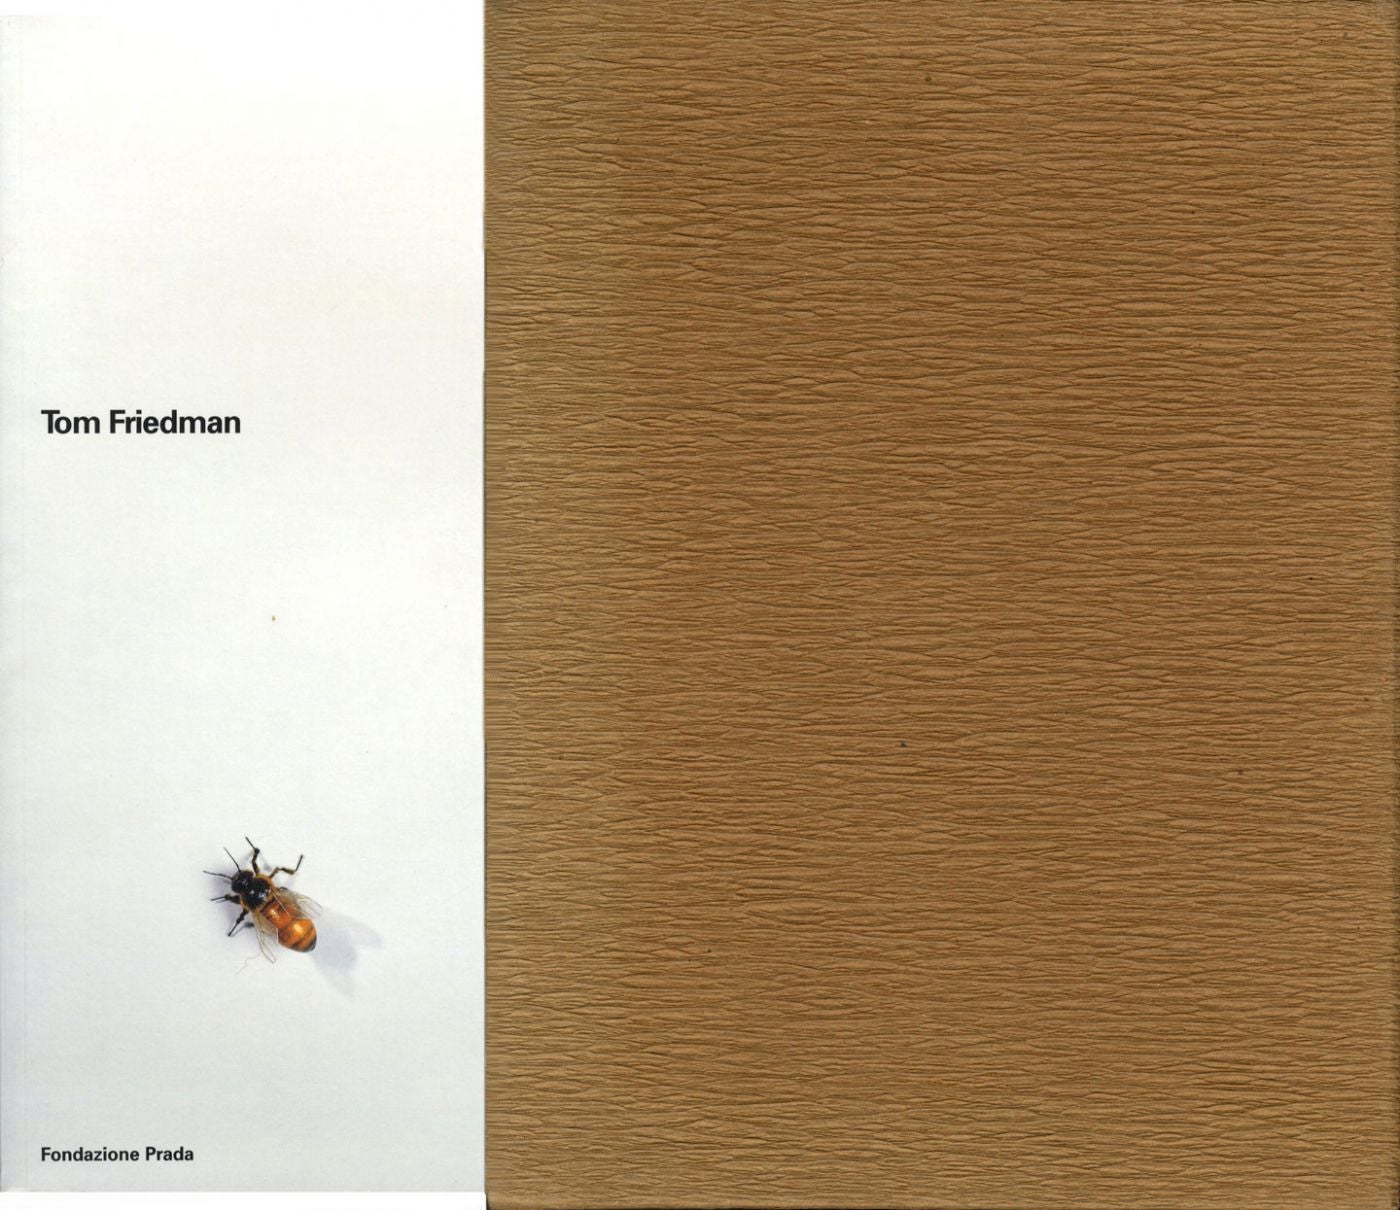 Tom Friedman (Fondazione Prada, Slipcased Two Volume Set)